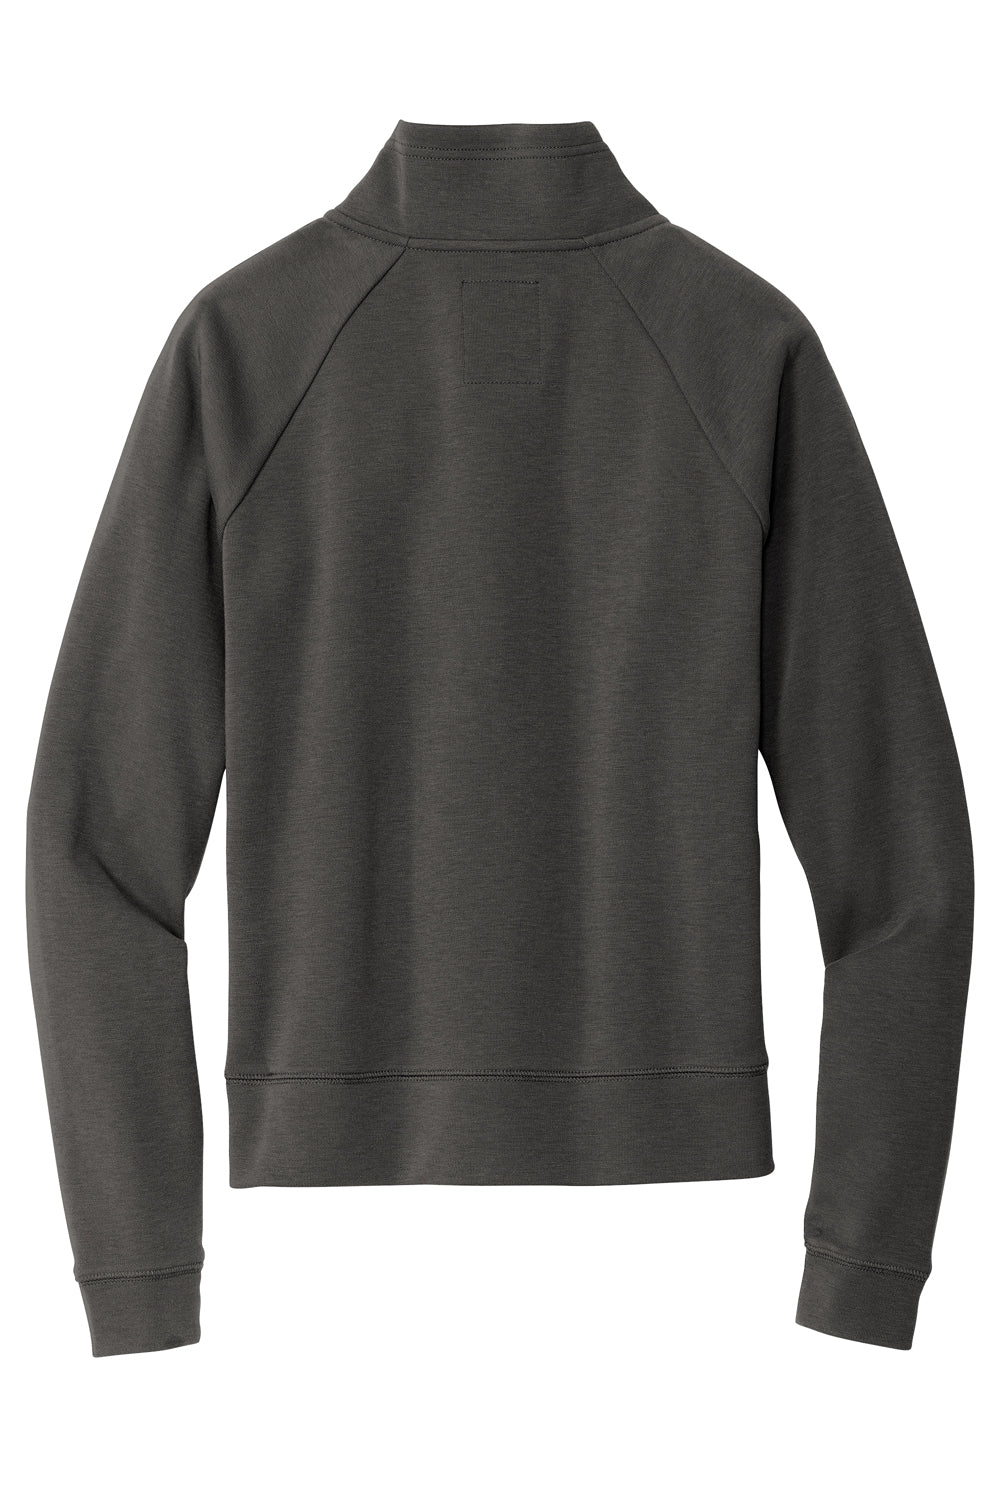 New Era LNEA541 Mens STS 1/4 Zip Sweatshirt Graphite Grey Flat Back